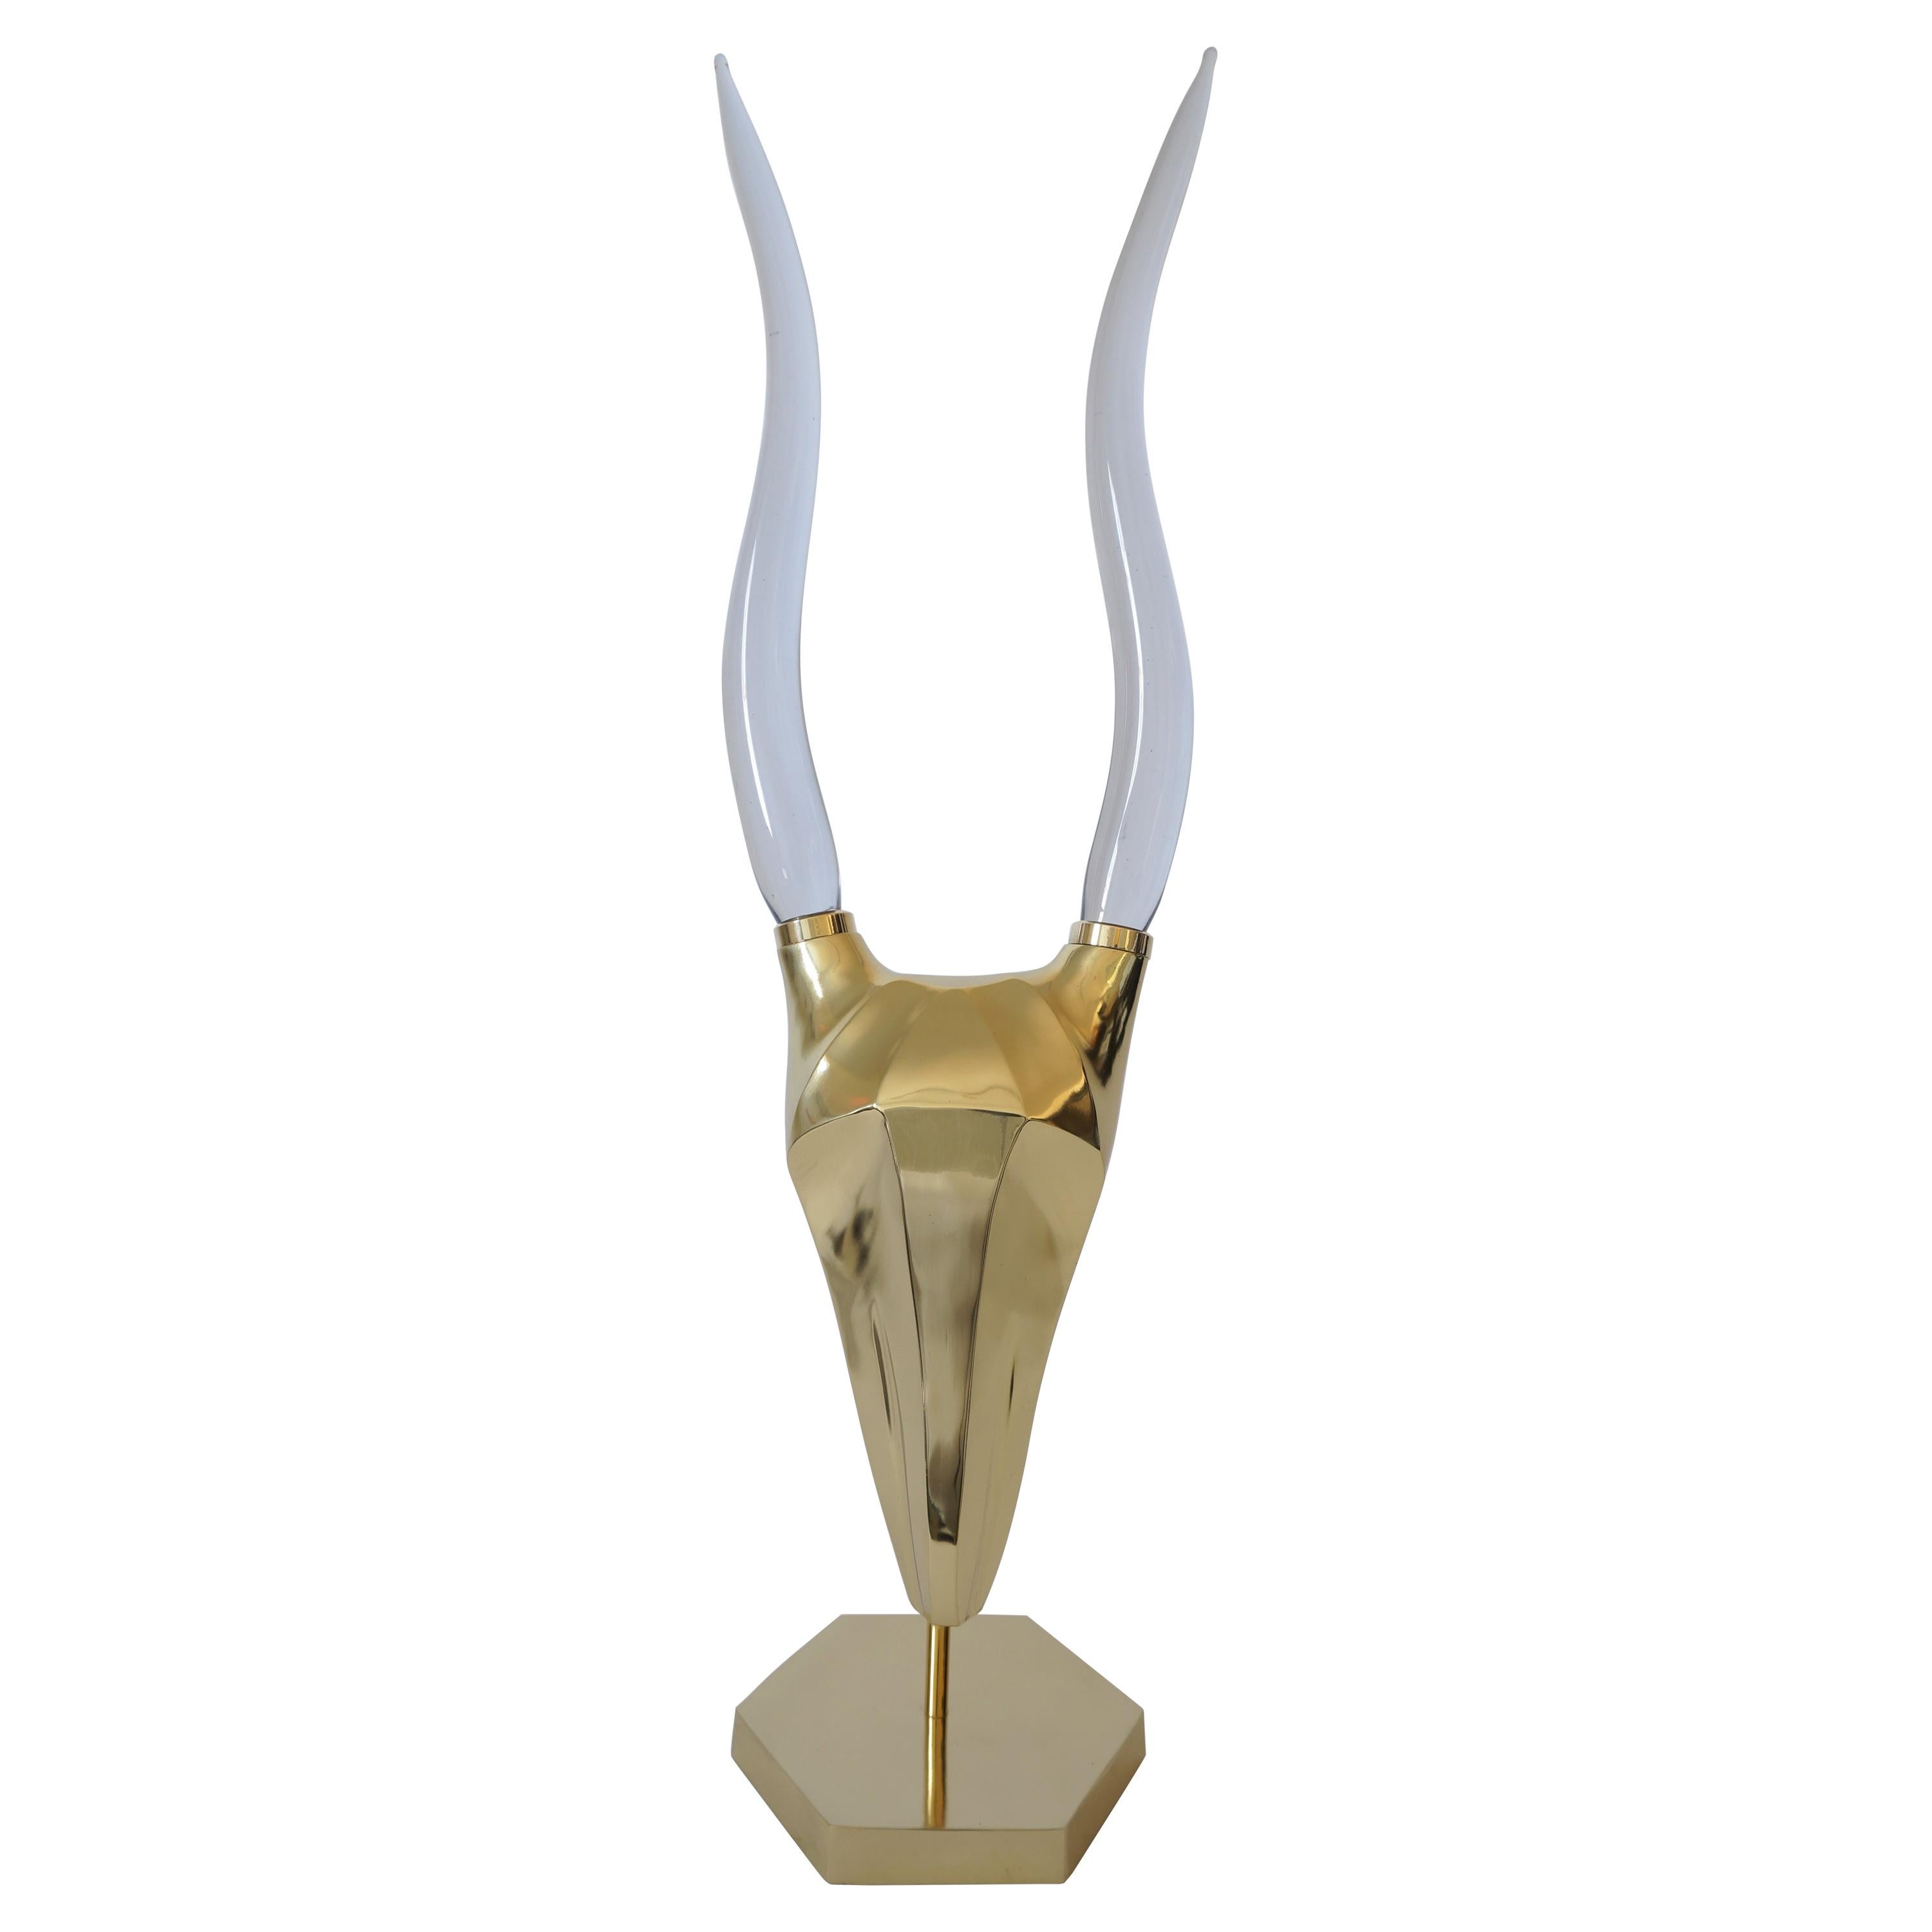 Sculpture of a Gazelle Head by Karl Springer